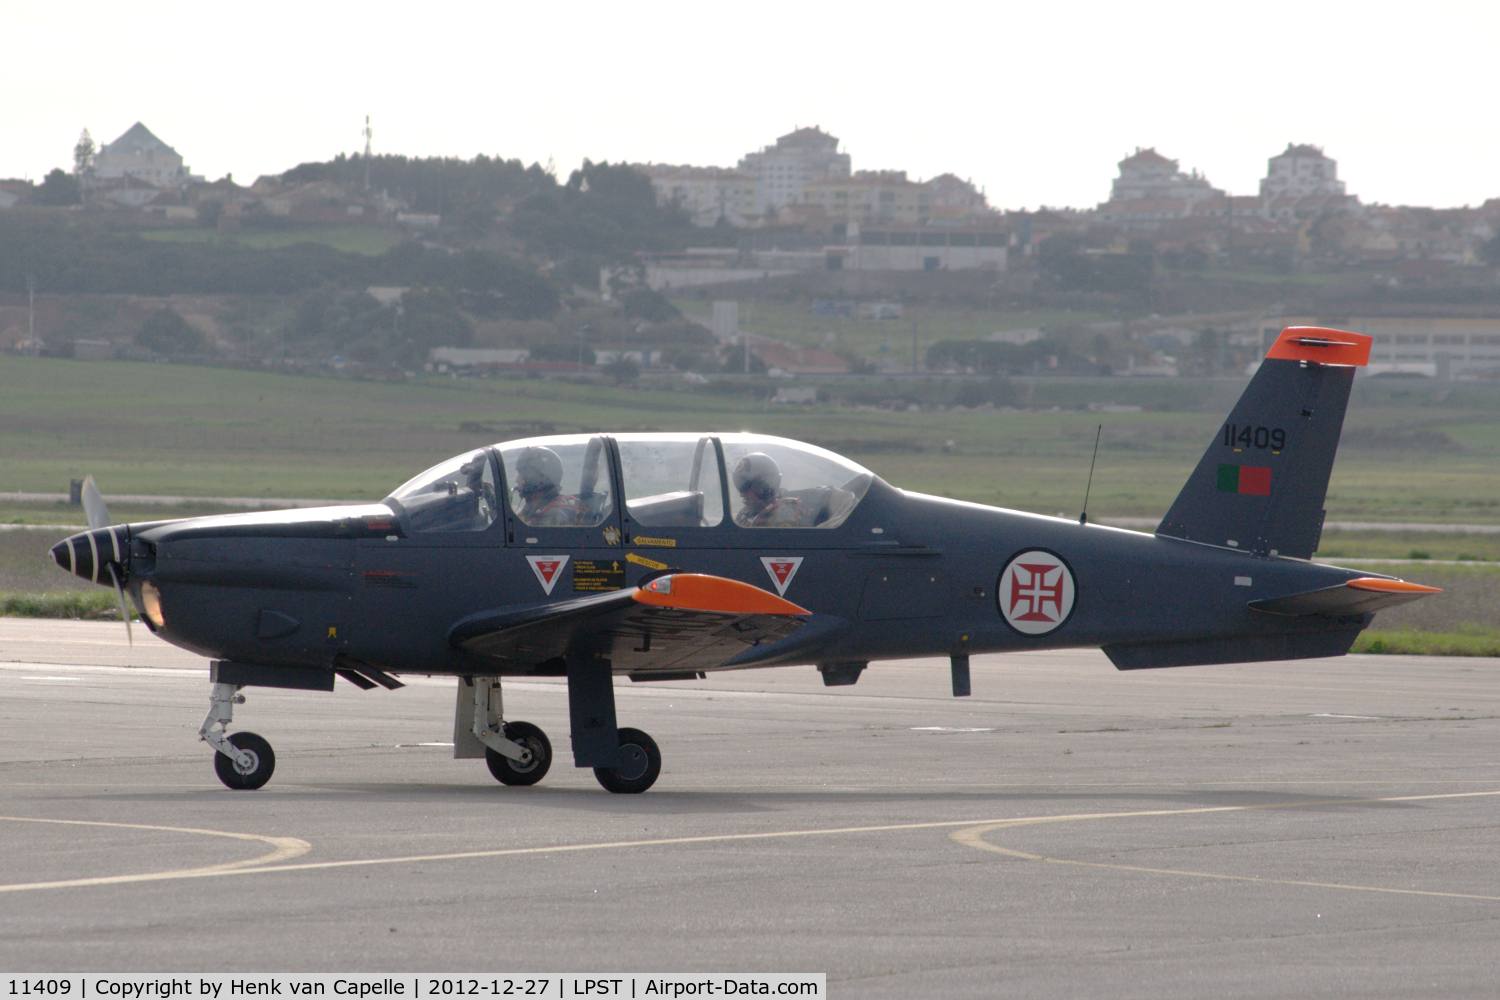 11409, Socata TB-30 Epsilon C/N 166, An Epsilon trainer of the Portuguese Air Force taxying at Sintra air force base.